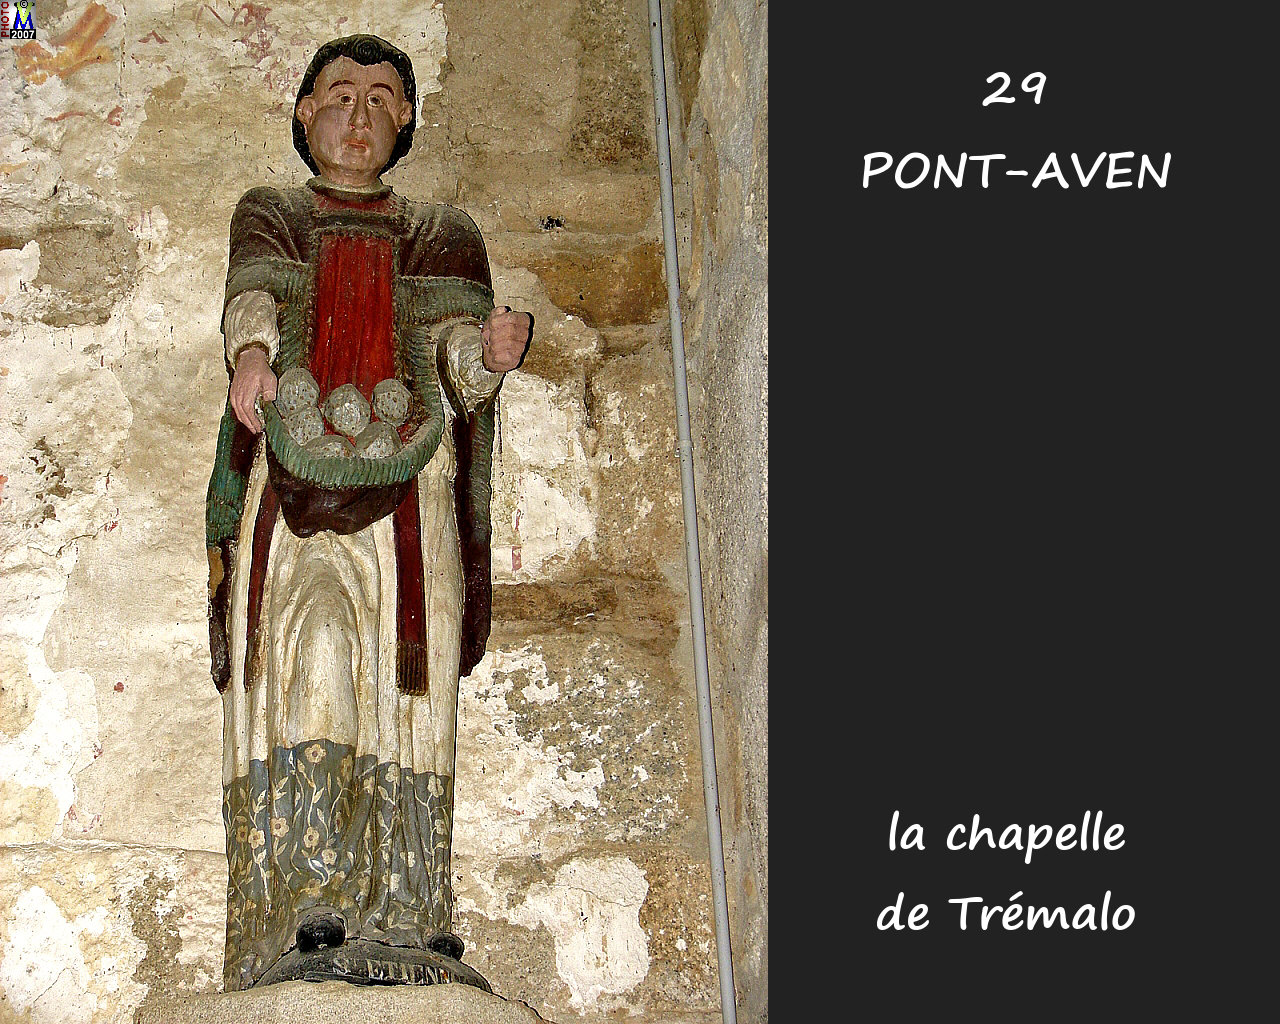 29PONT-AVEN-Tremalo-_chapelle_216.jpg